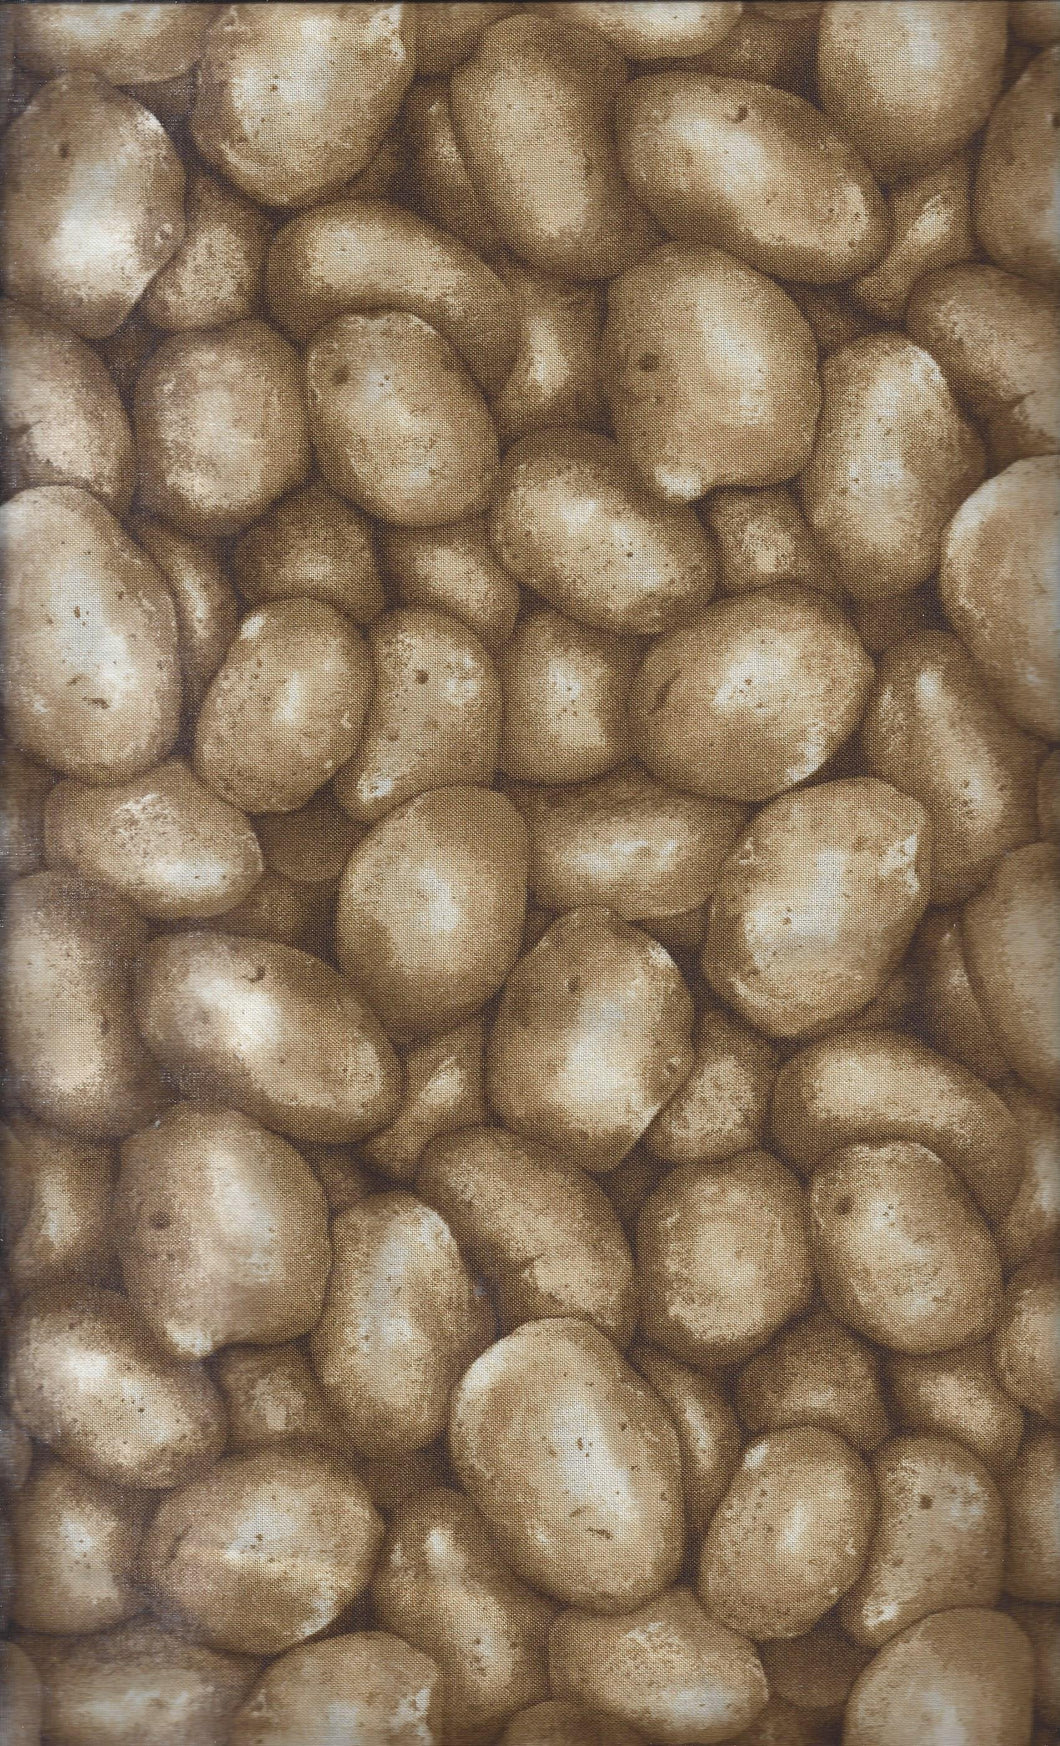 Farmer John's II Brown Potatoes ed524